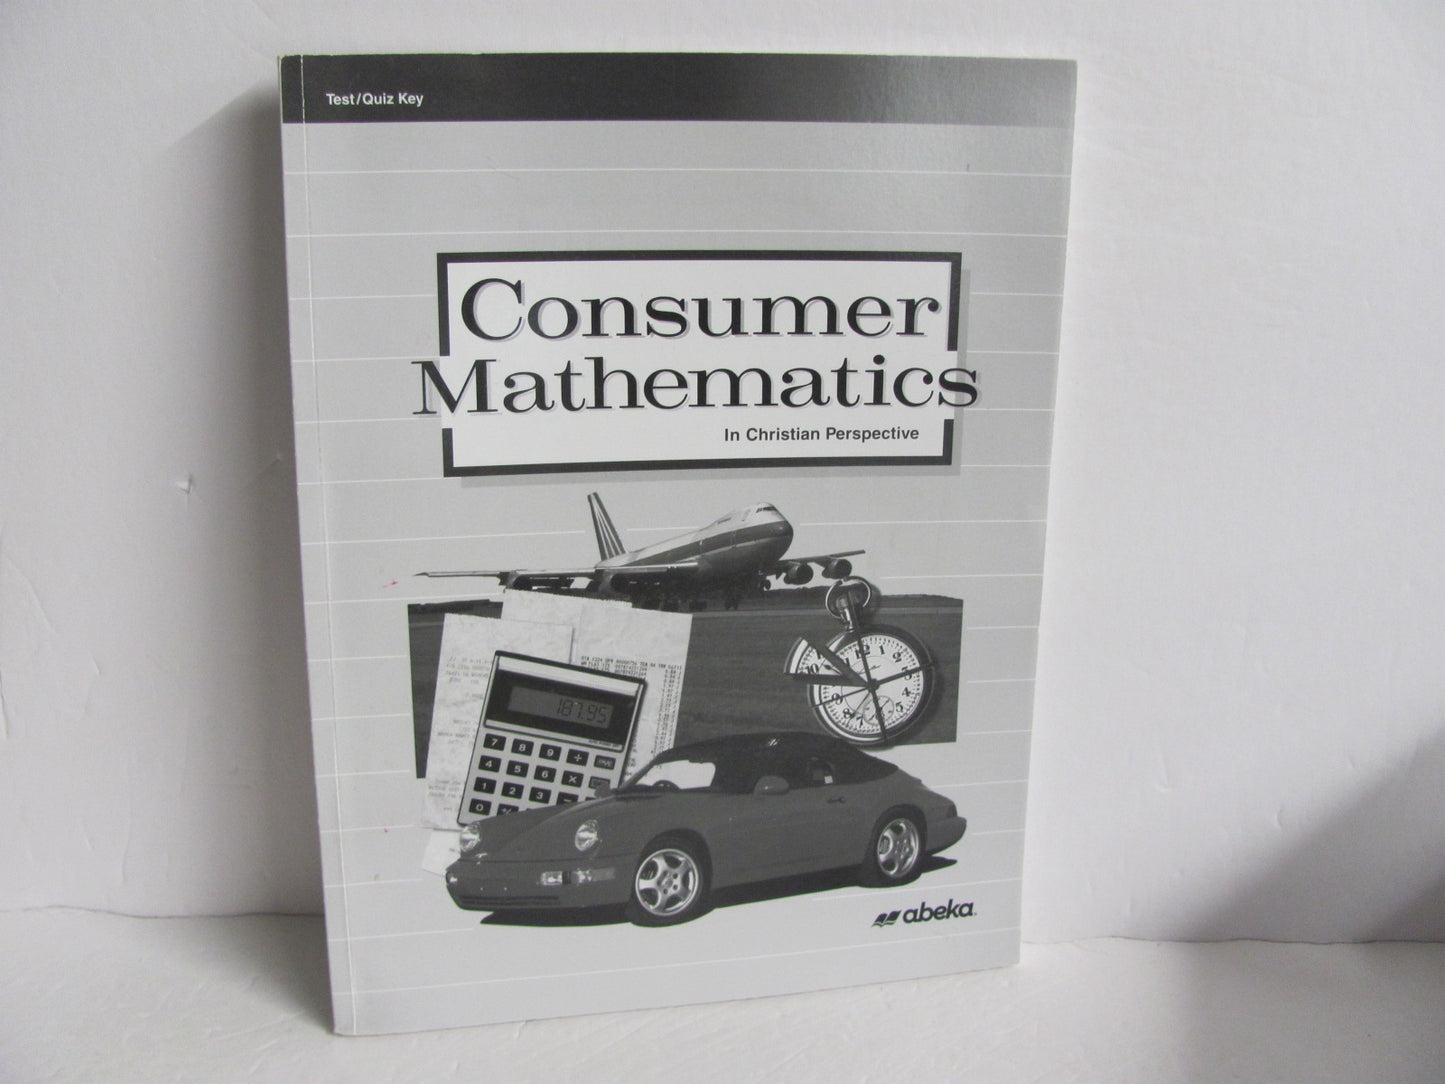 Consumer Mathematics Abeka Test/Quiz Key  Pre-Owned Mathematics Textbooks